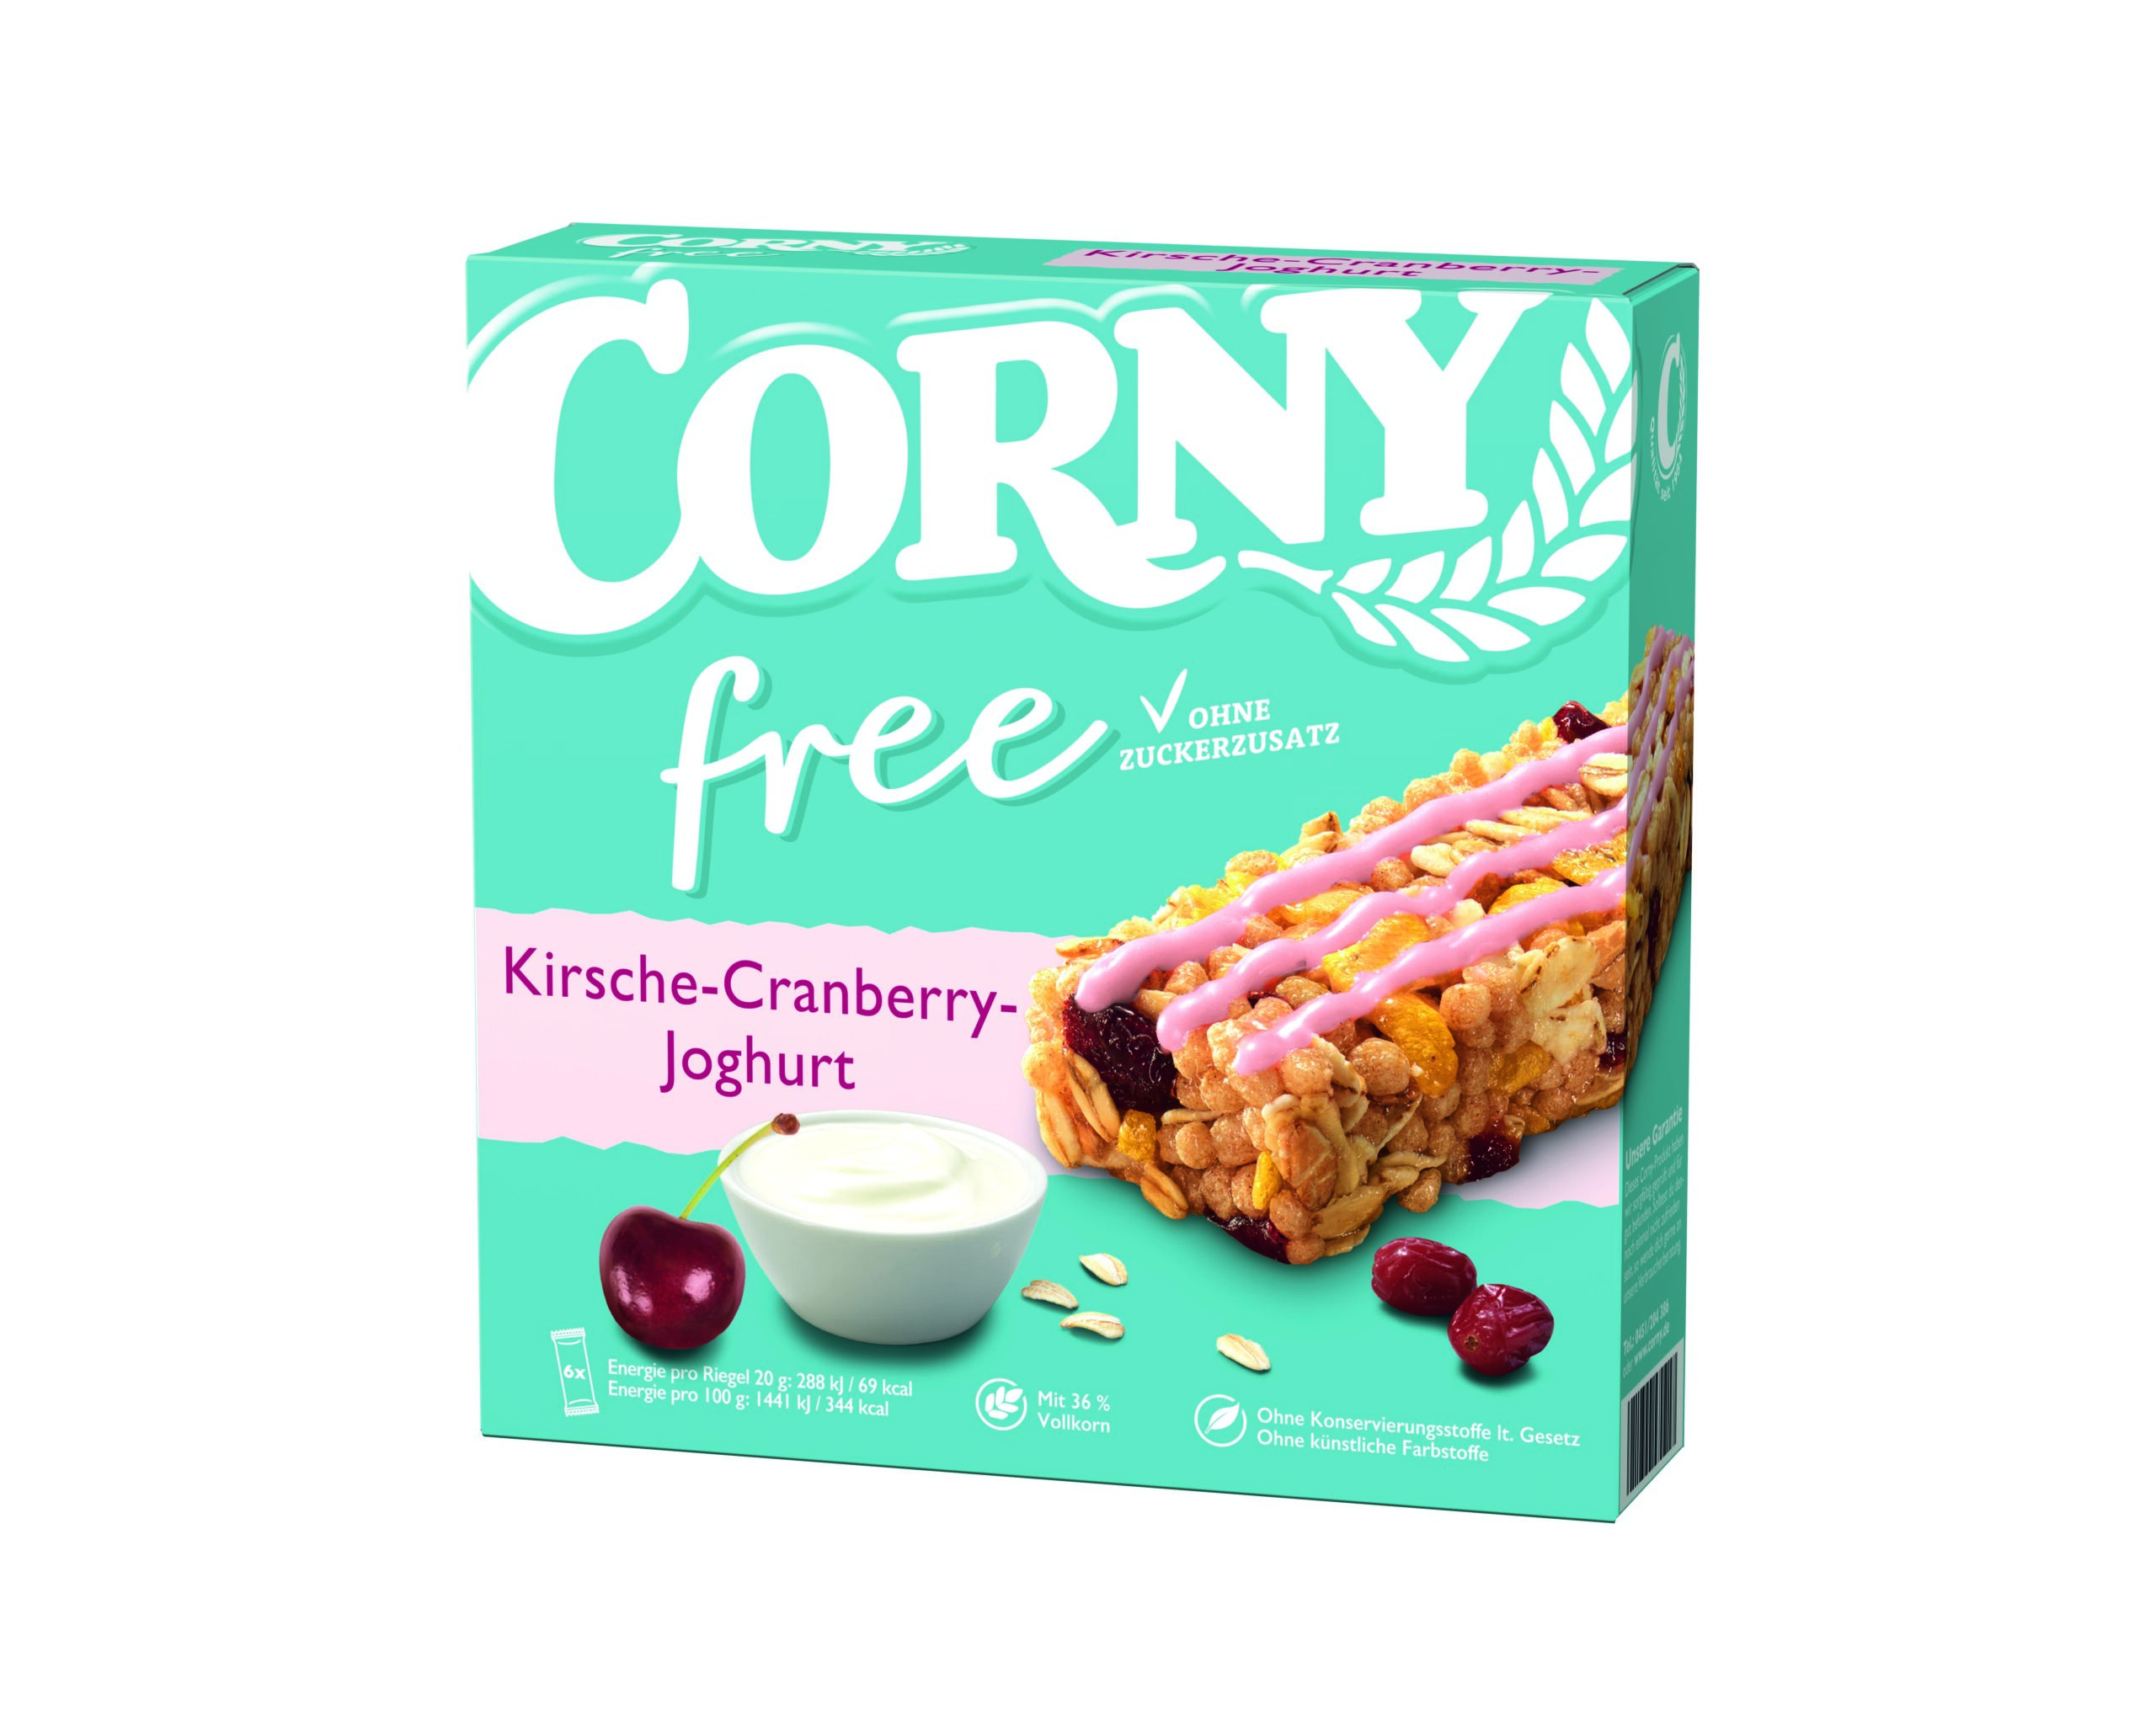 Corny Free Kirsche-Cranberry-Joghurt 6x20g Packung